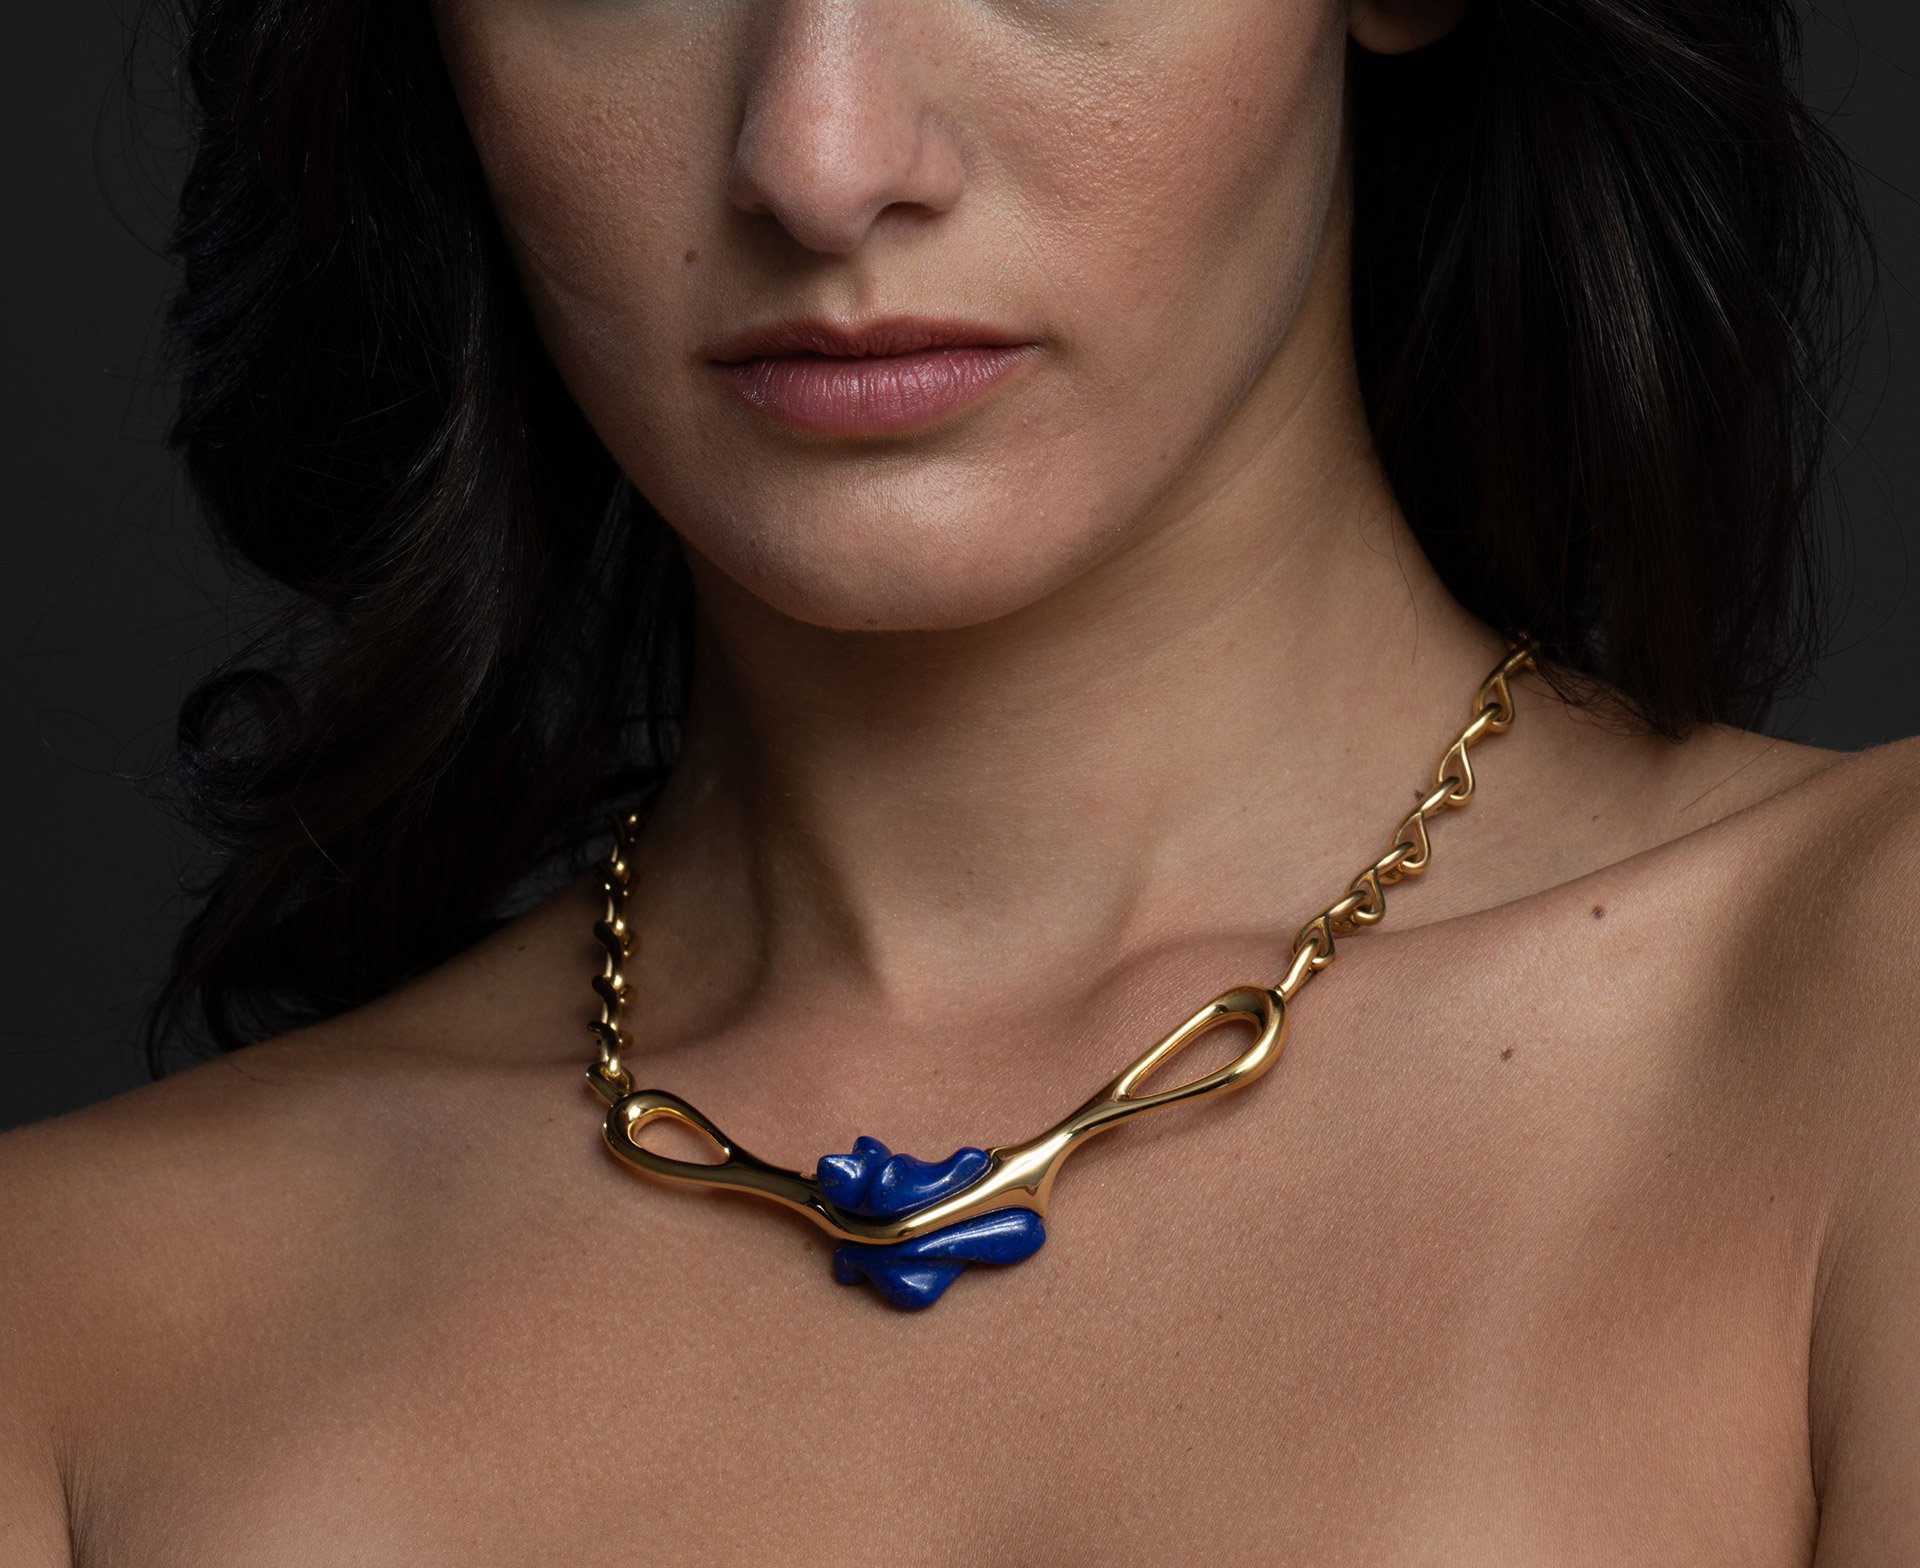 DULCE-egypt-necklaces-collection-julio-martinez-barnetche-marion-friedmann-gallery-LR-egypt18-cut.jpg